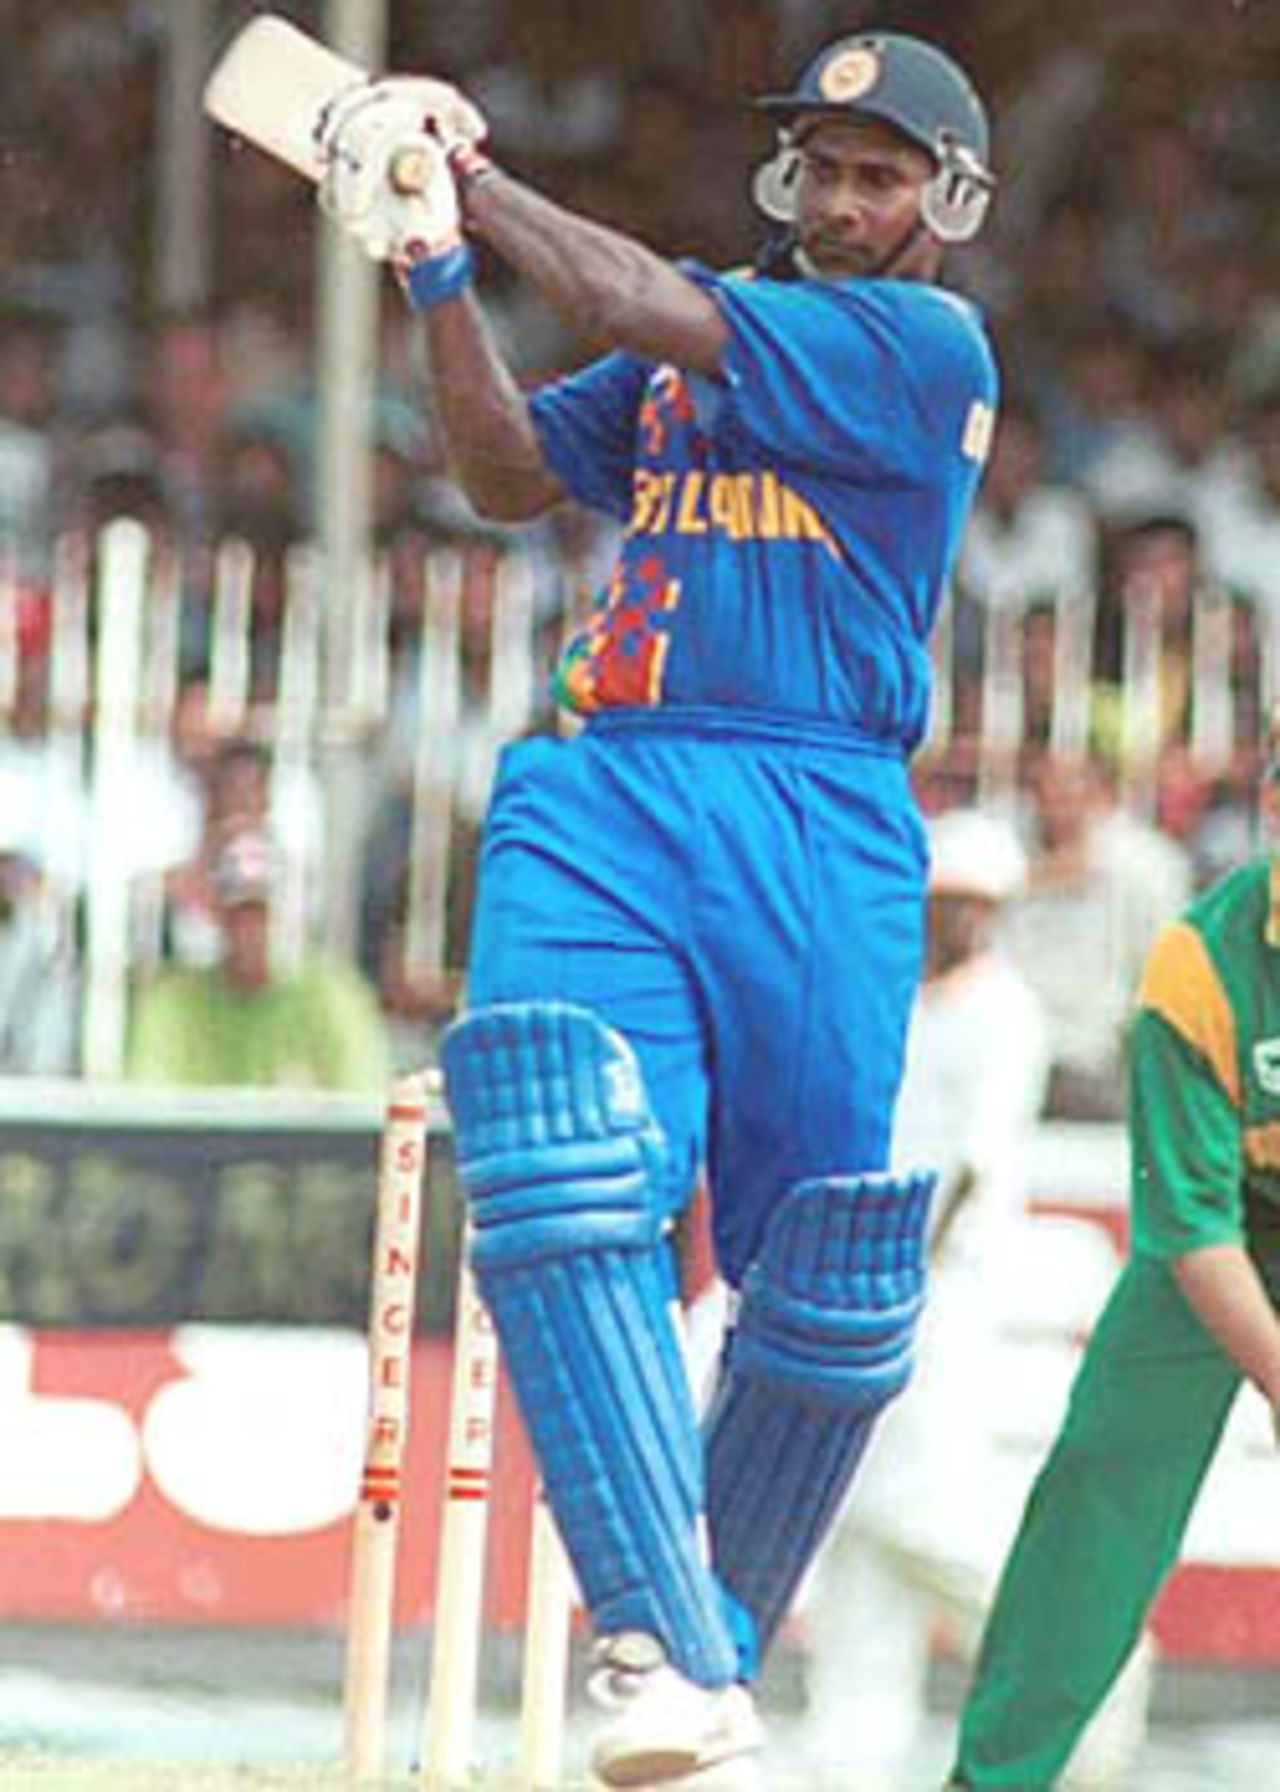 Avishka Gunawardene executes the pull, Singer Triangular Series, 2000/01, 5th Match, Sri Lanka v South Africa, Sinhalese Sports Club Ground, Colombo 11 July 2000.